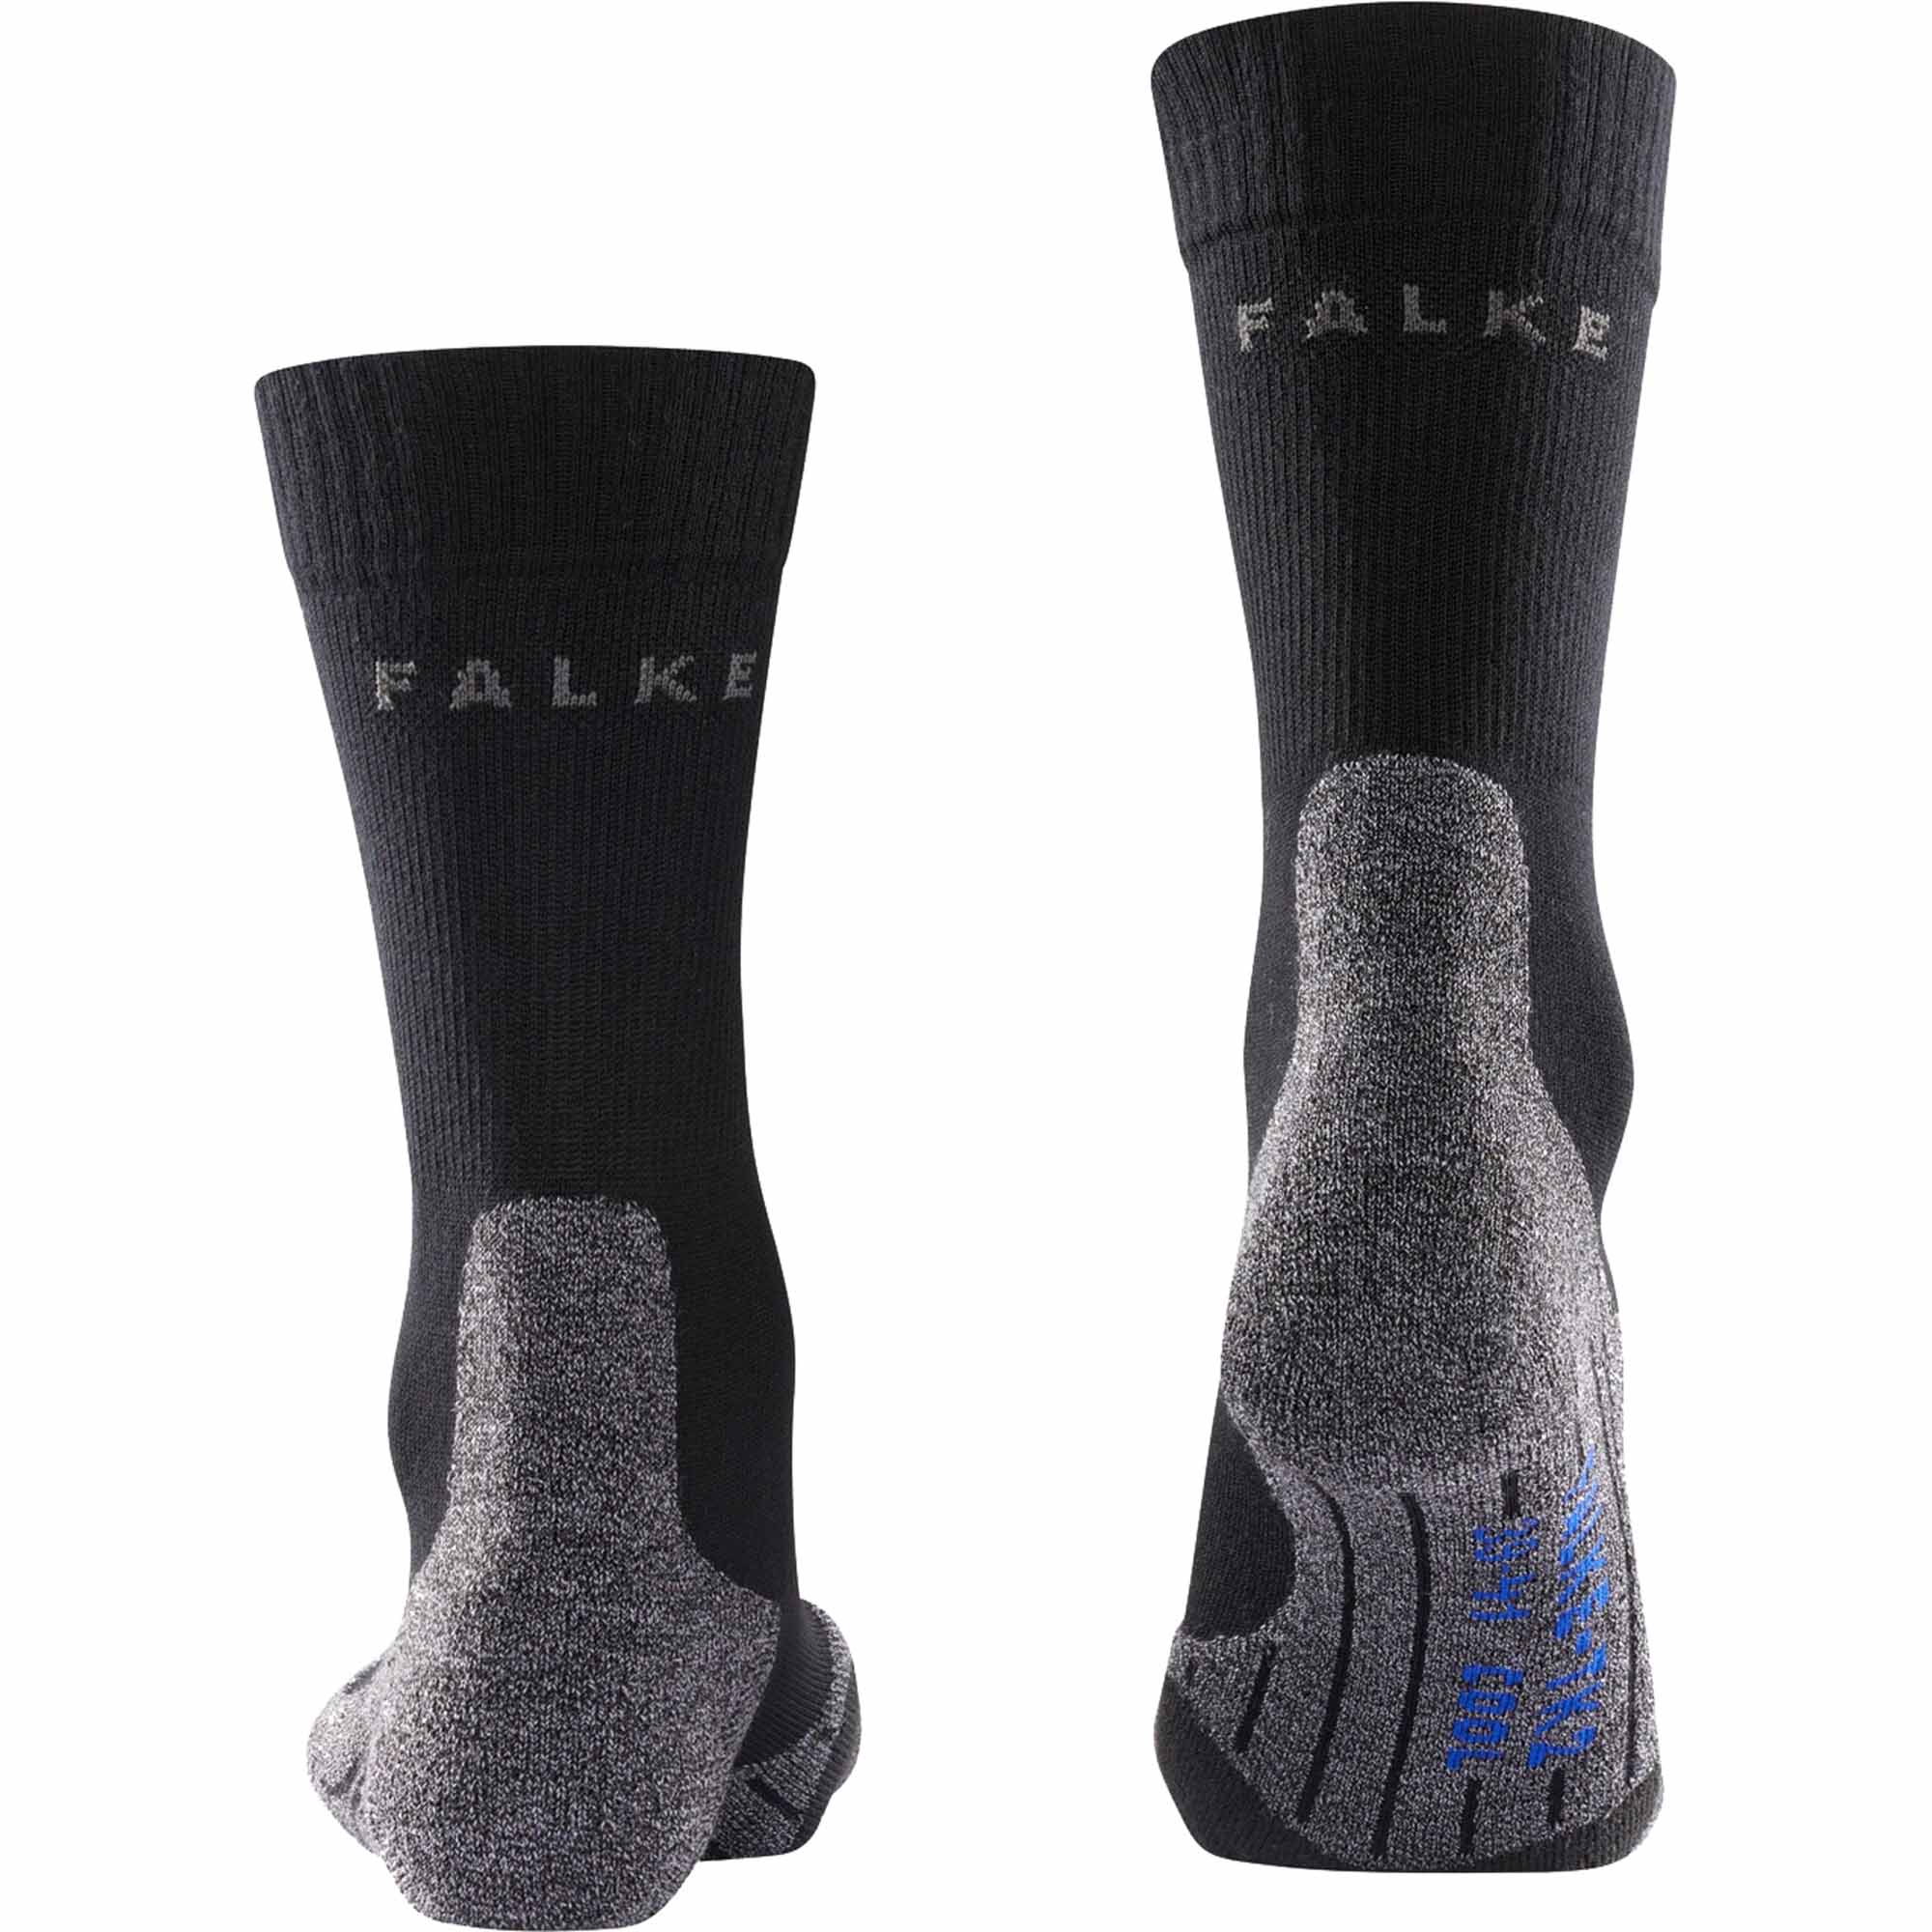 Falke TK2 Explore Cool Hiking/Walking Socks